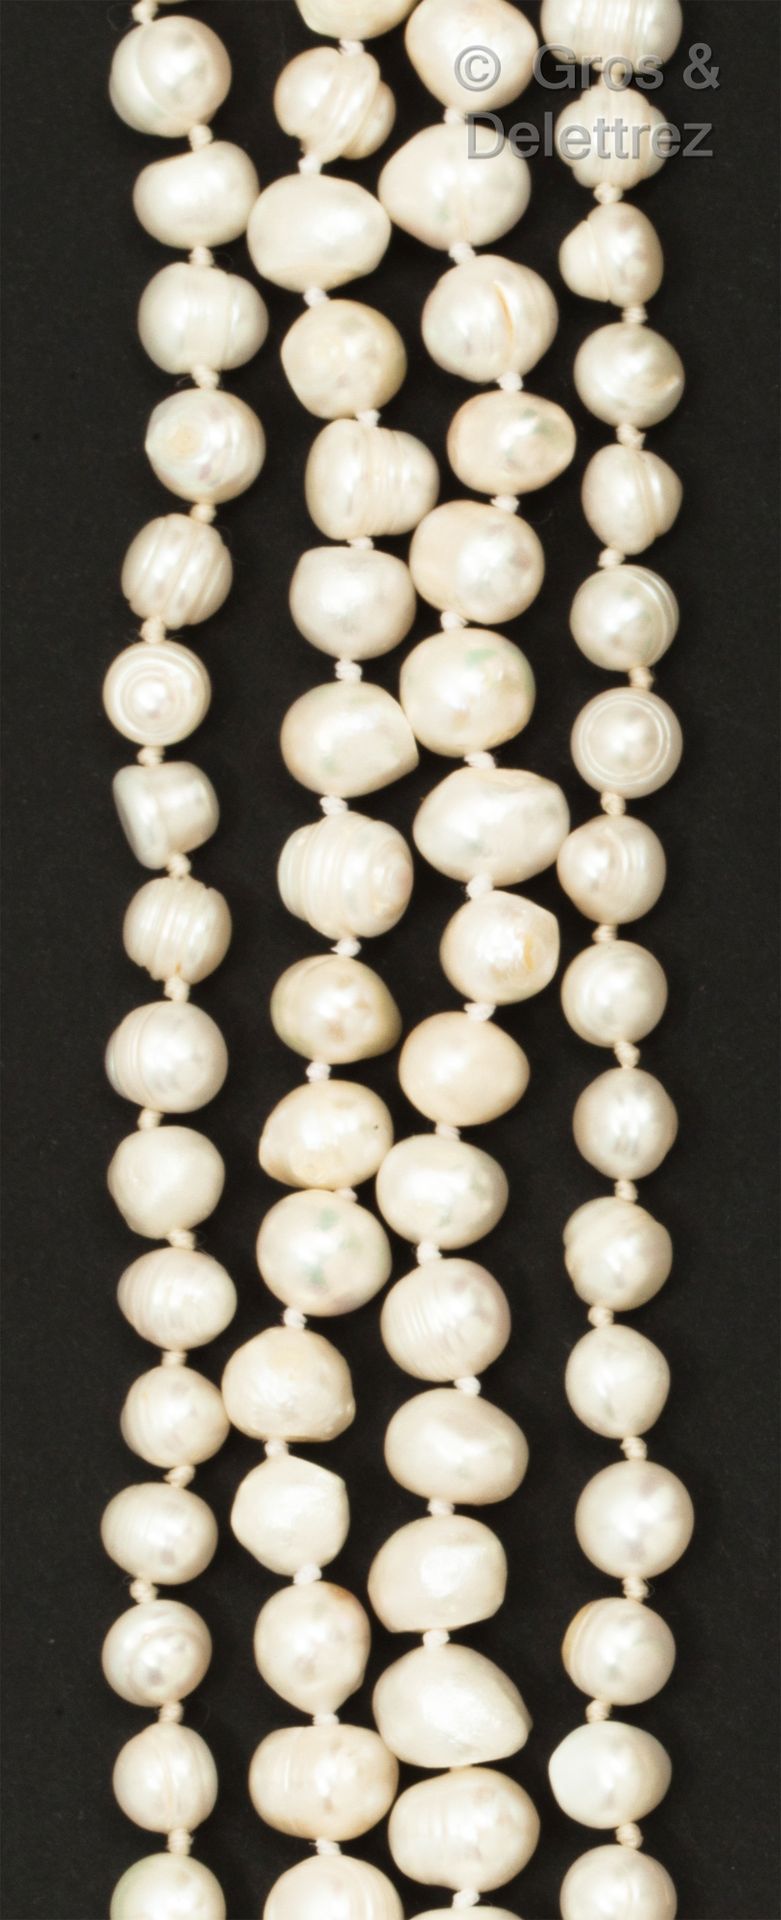 Null 重要的项链 "Collerette"，由四排巴洛克式的珍珠组成。扣子是银色的。长度：57厘米。毛重：228.1克。